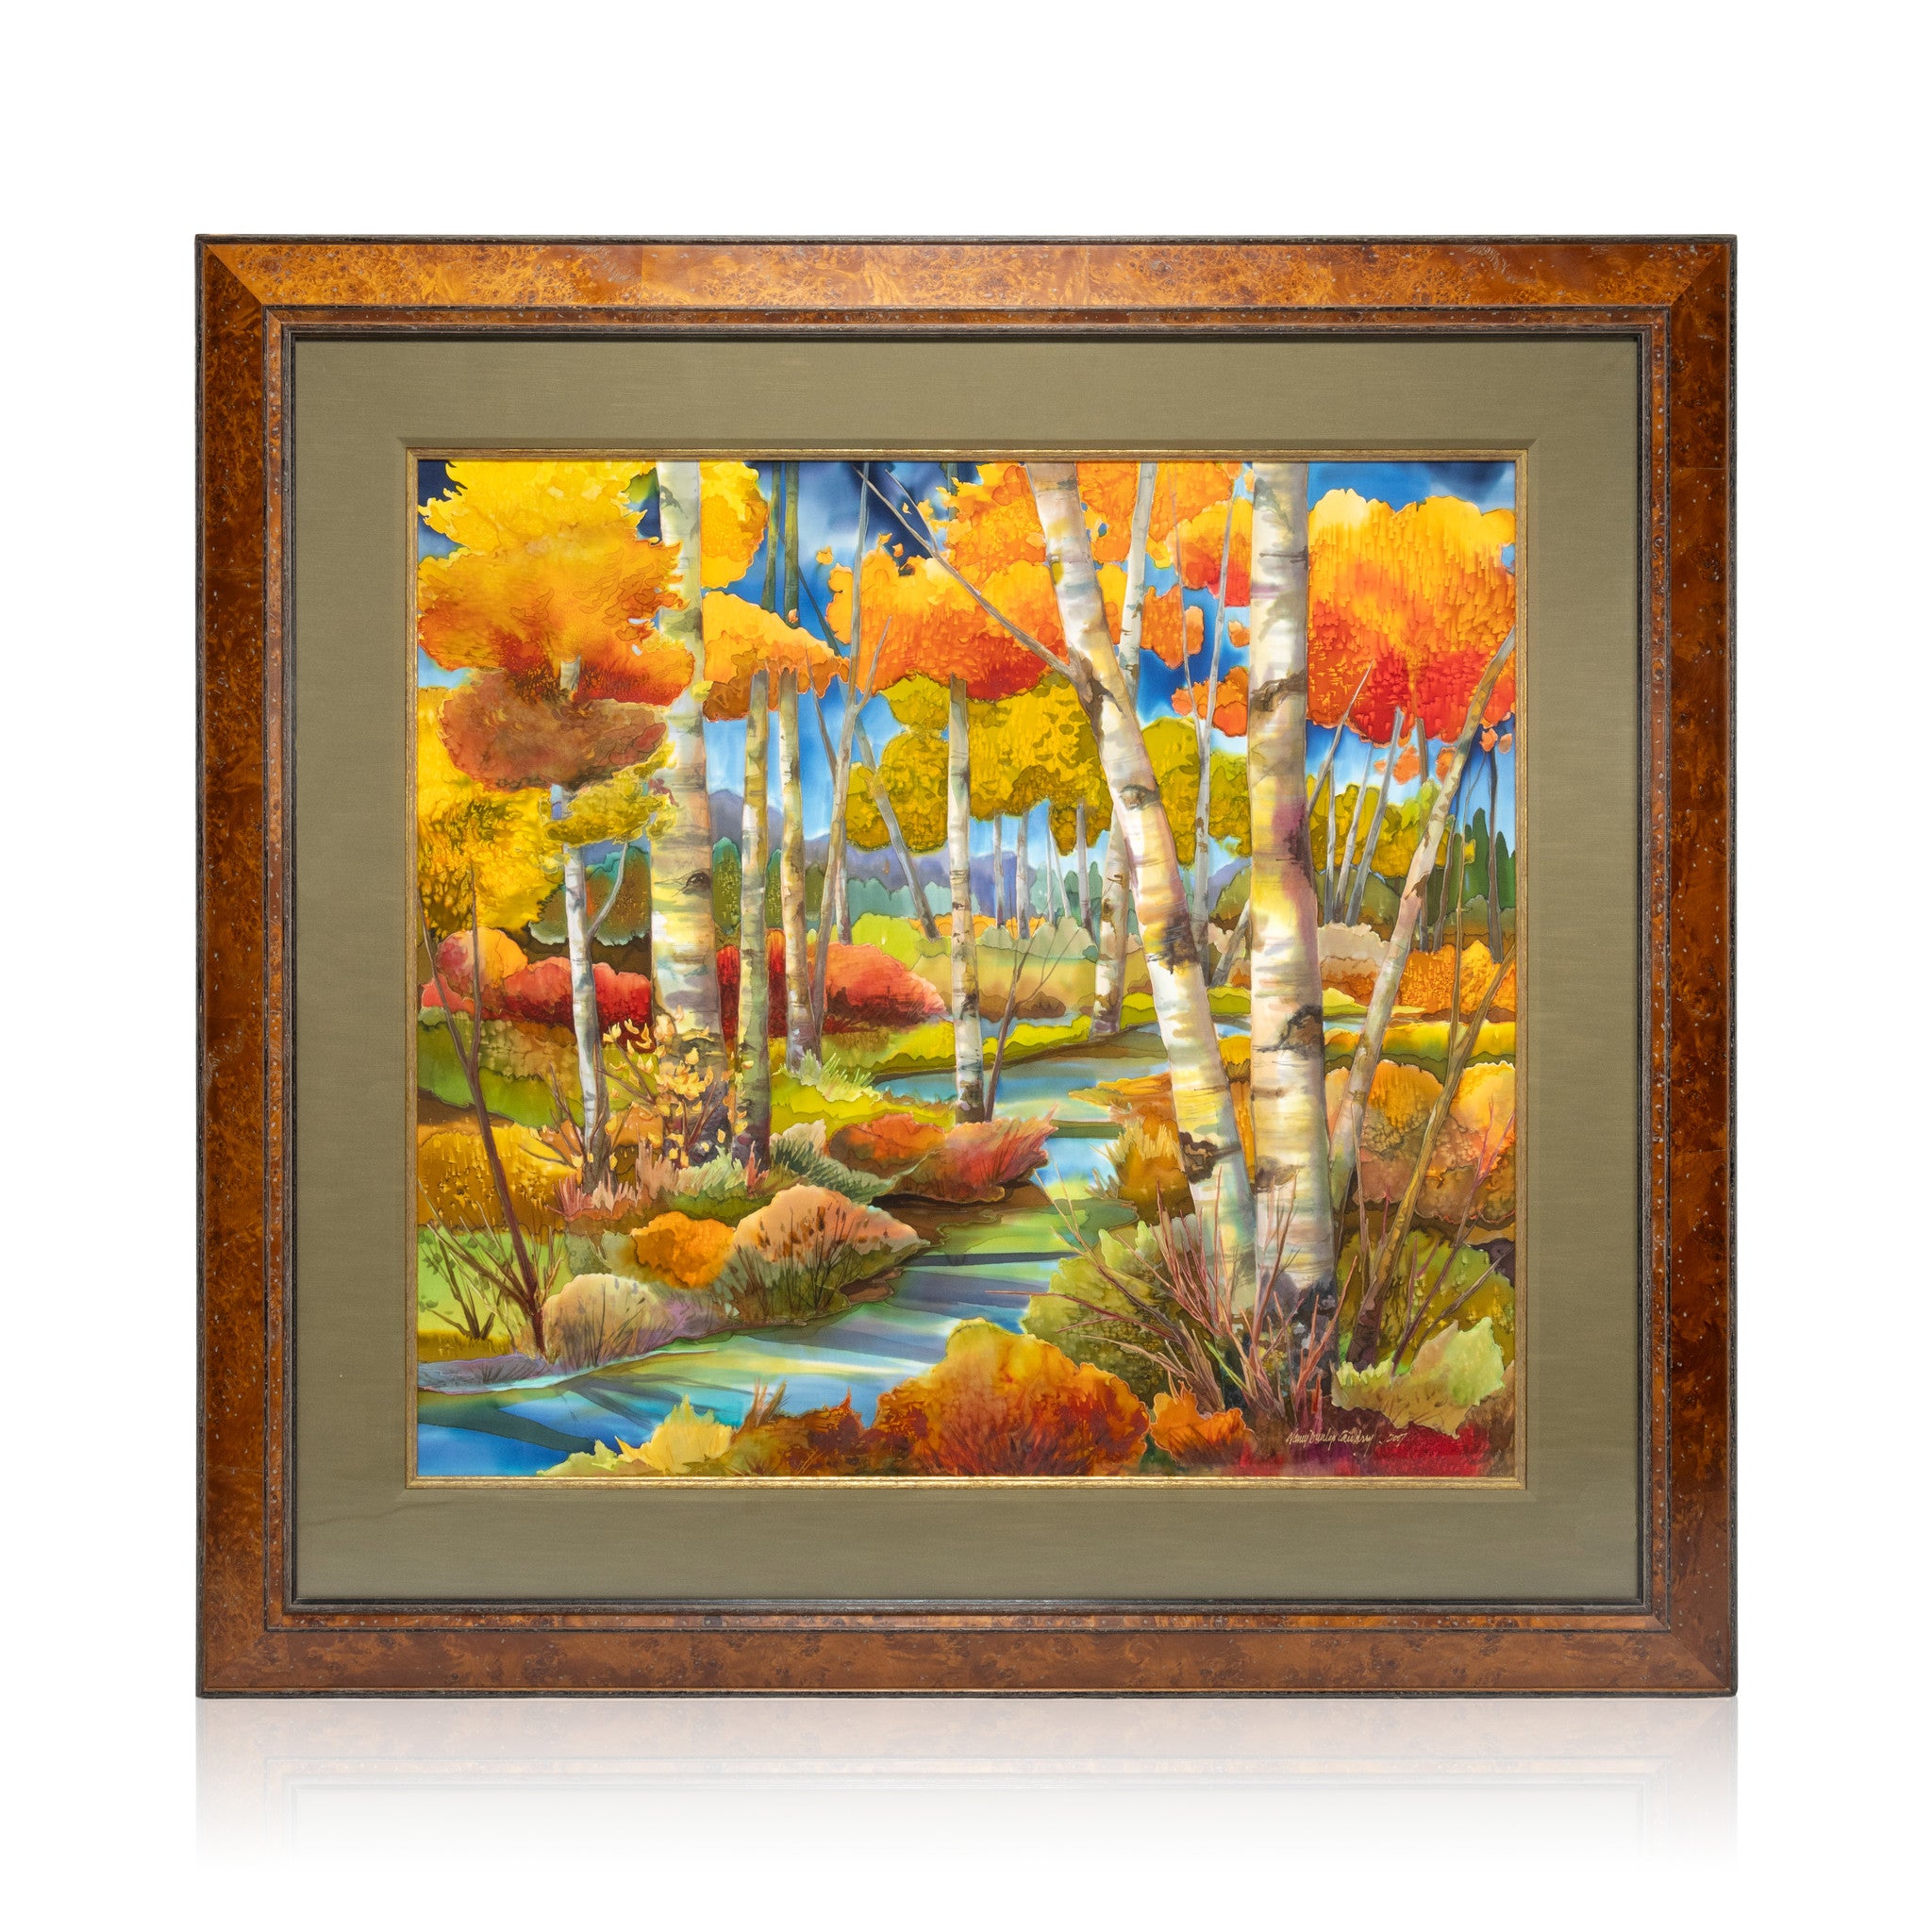 "Autumn Canopy by Stream" by Nancy Dunlop Cawdrey